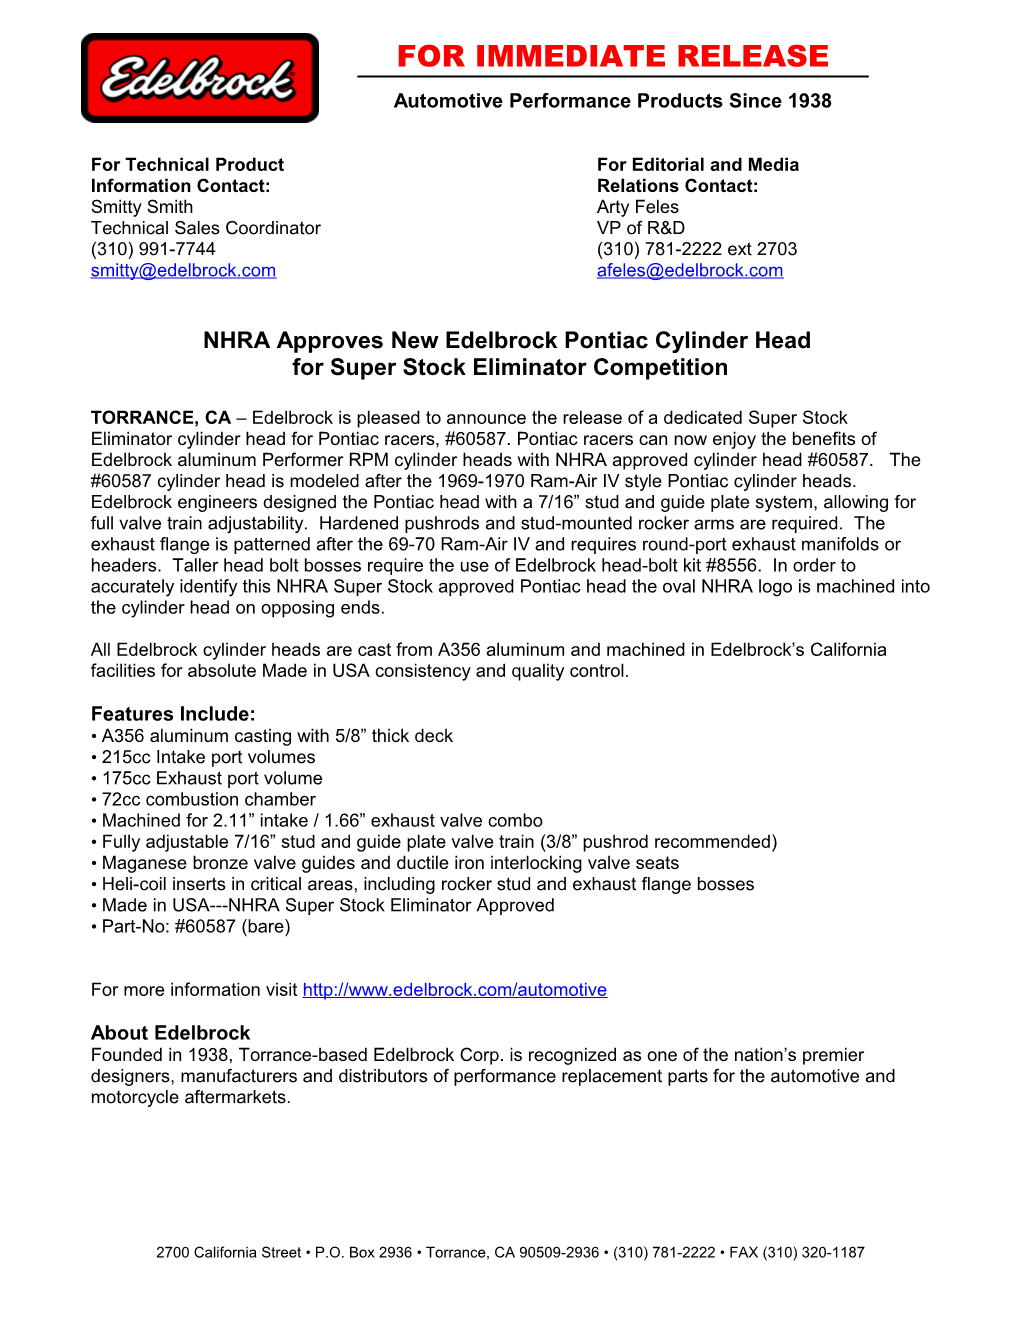 NHRA Approves New Edelbrock Pontiac Cylinder Head